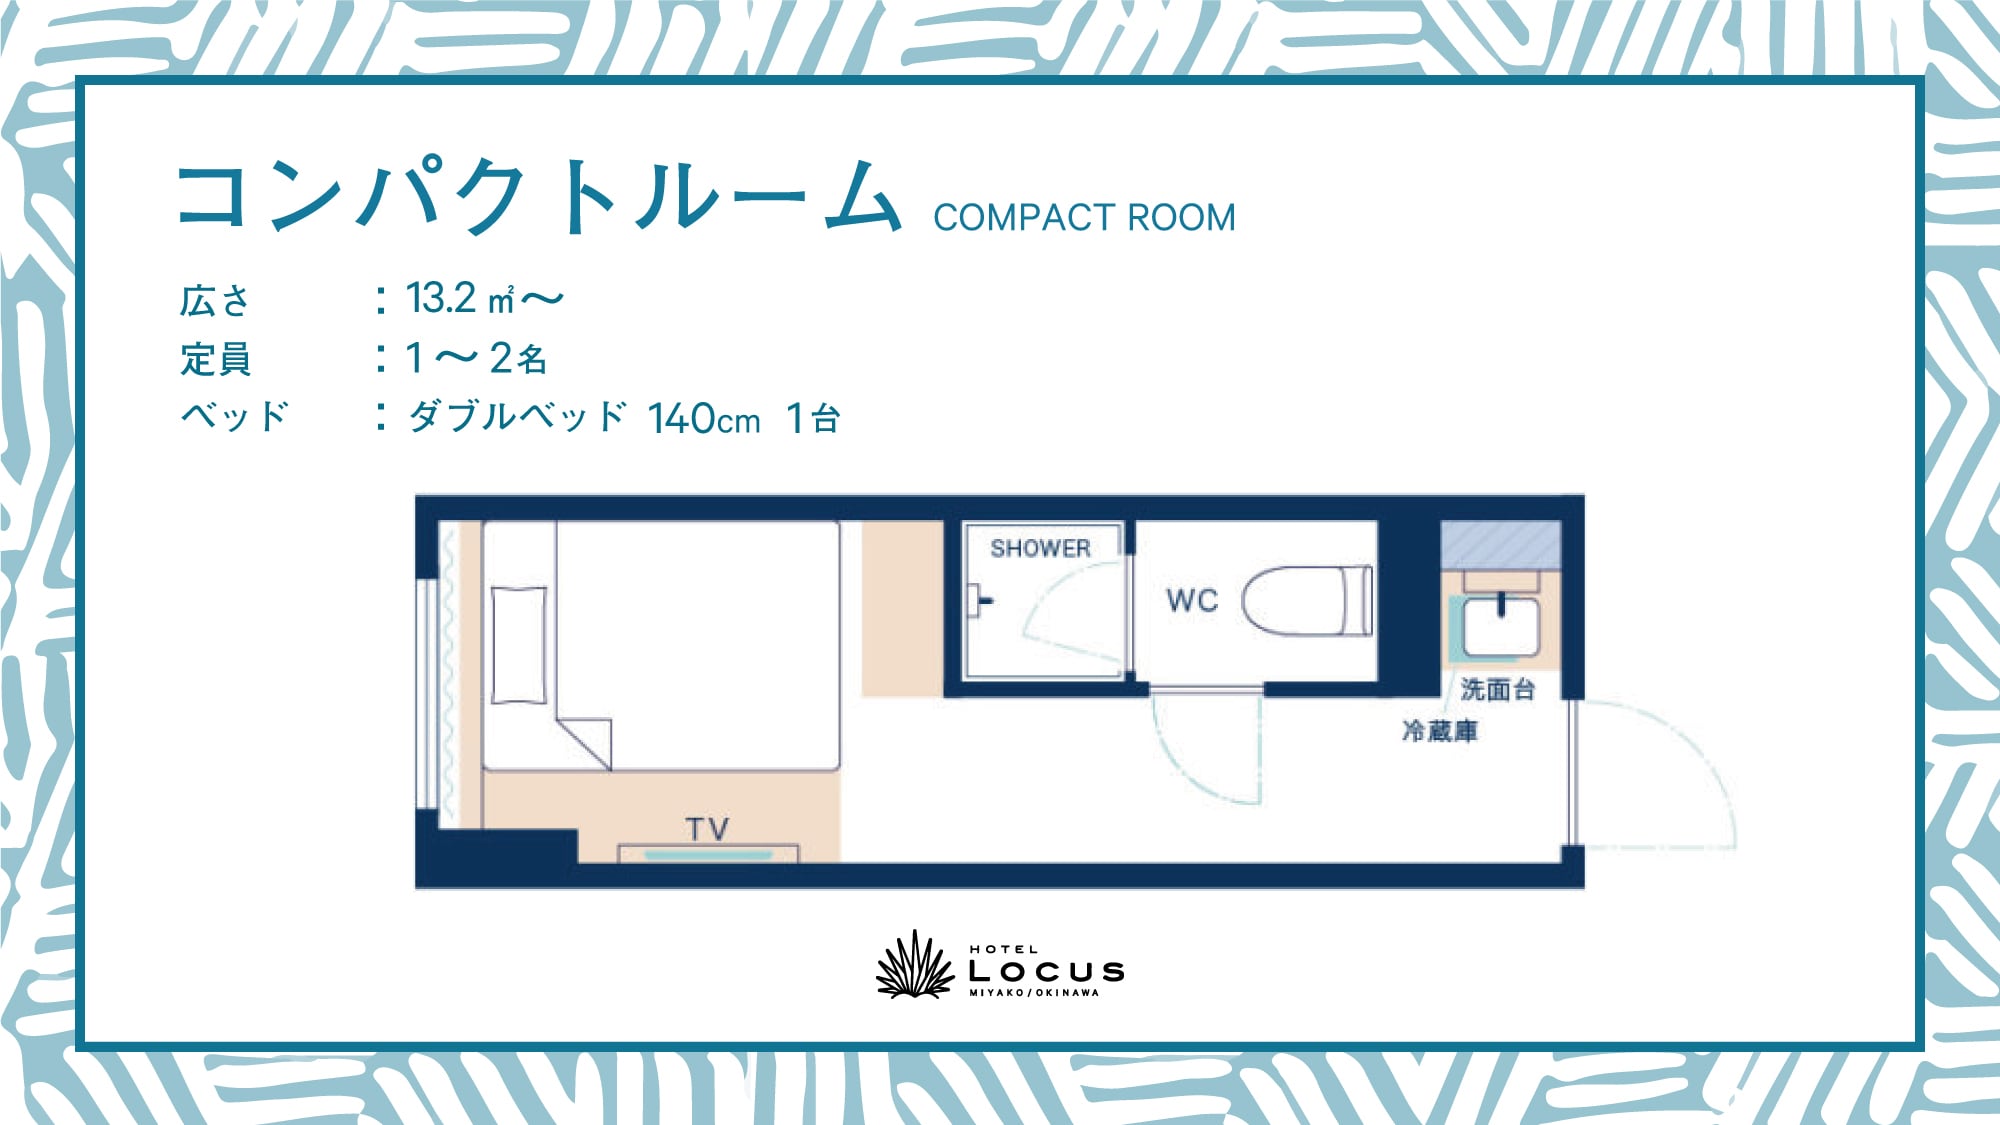 ◆ Compact room